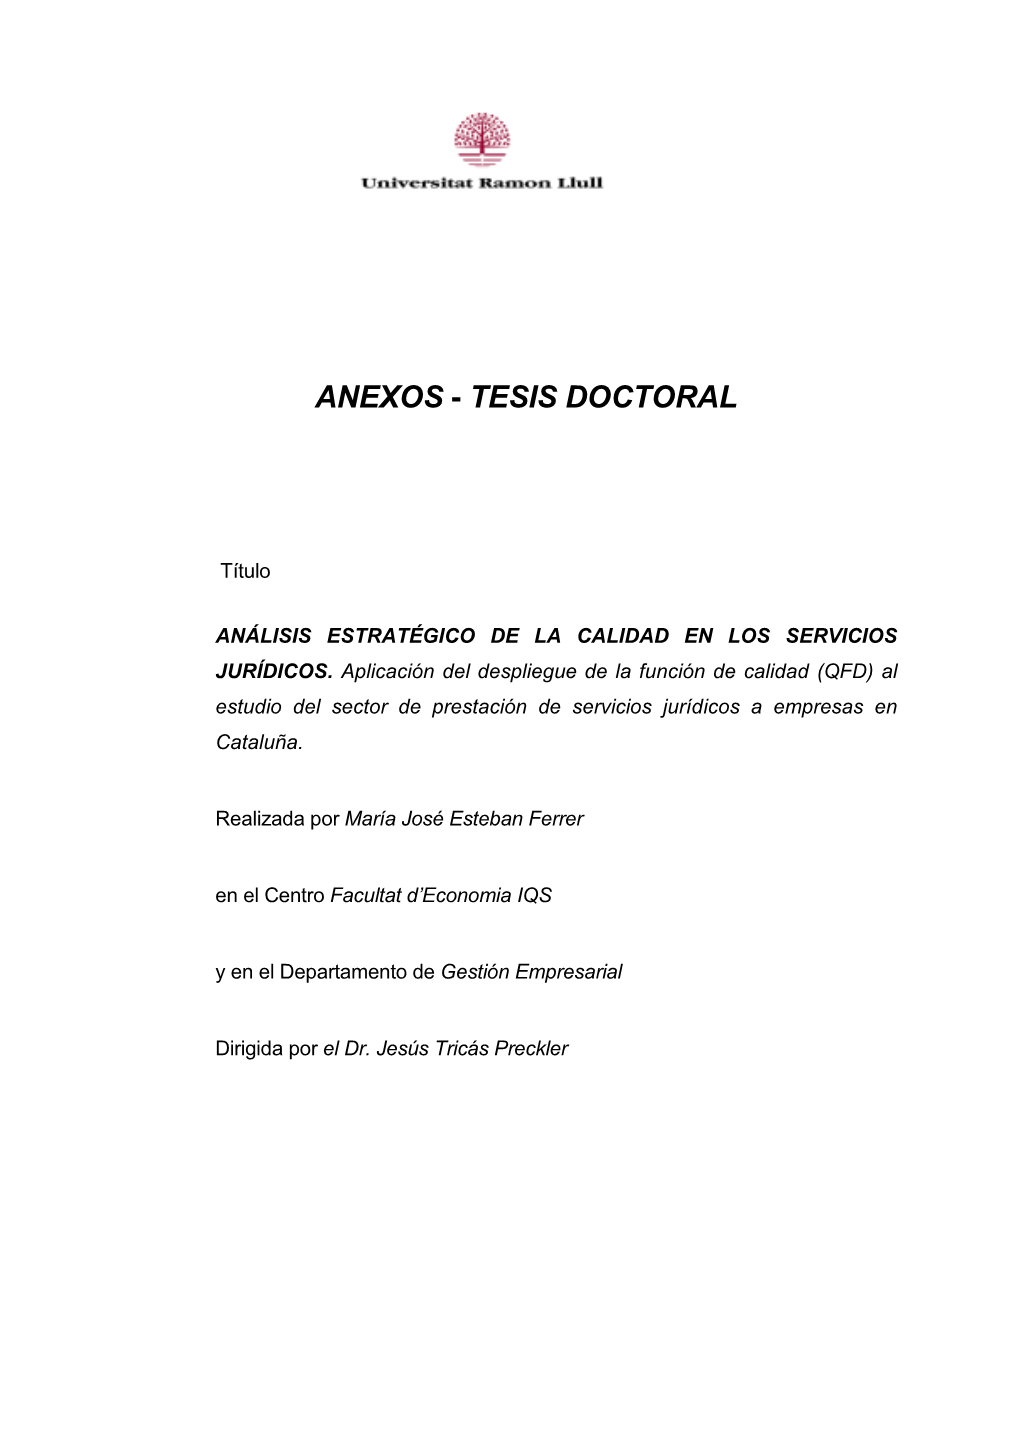 Anexos - Tesis Doctoral